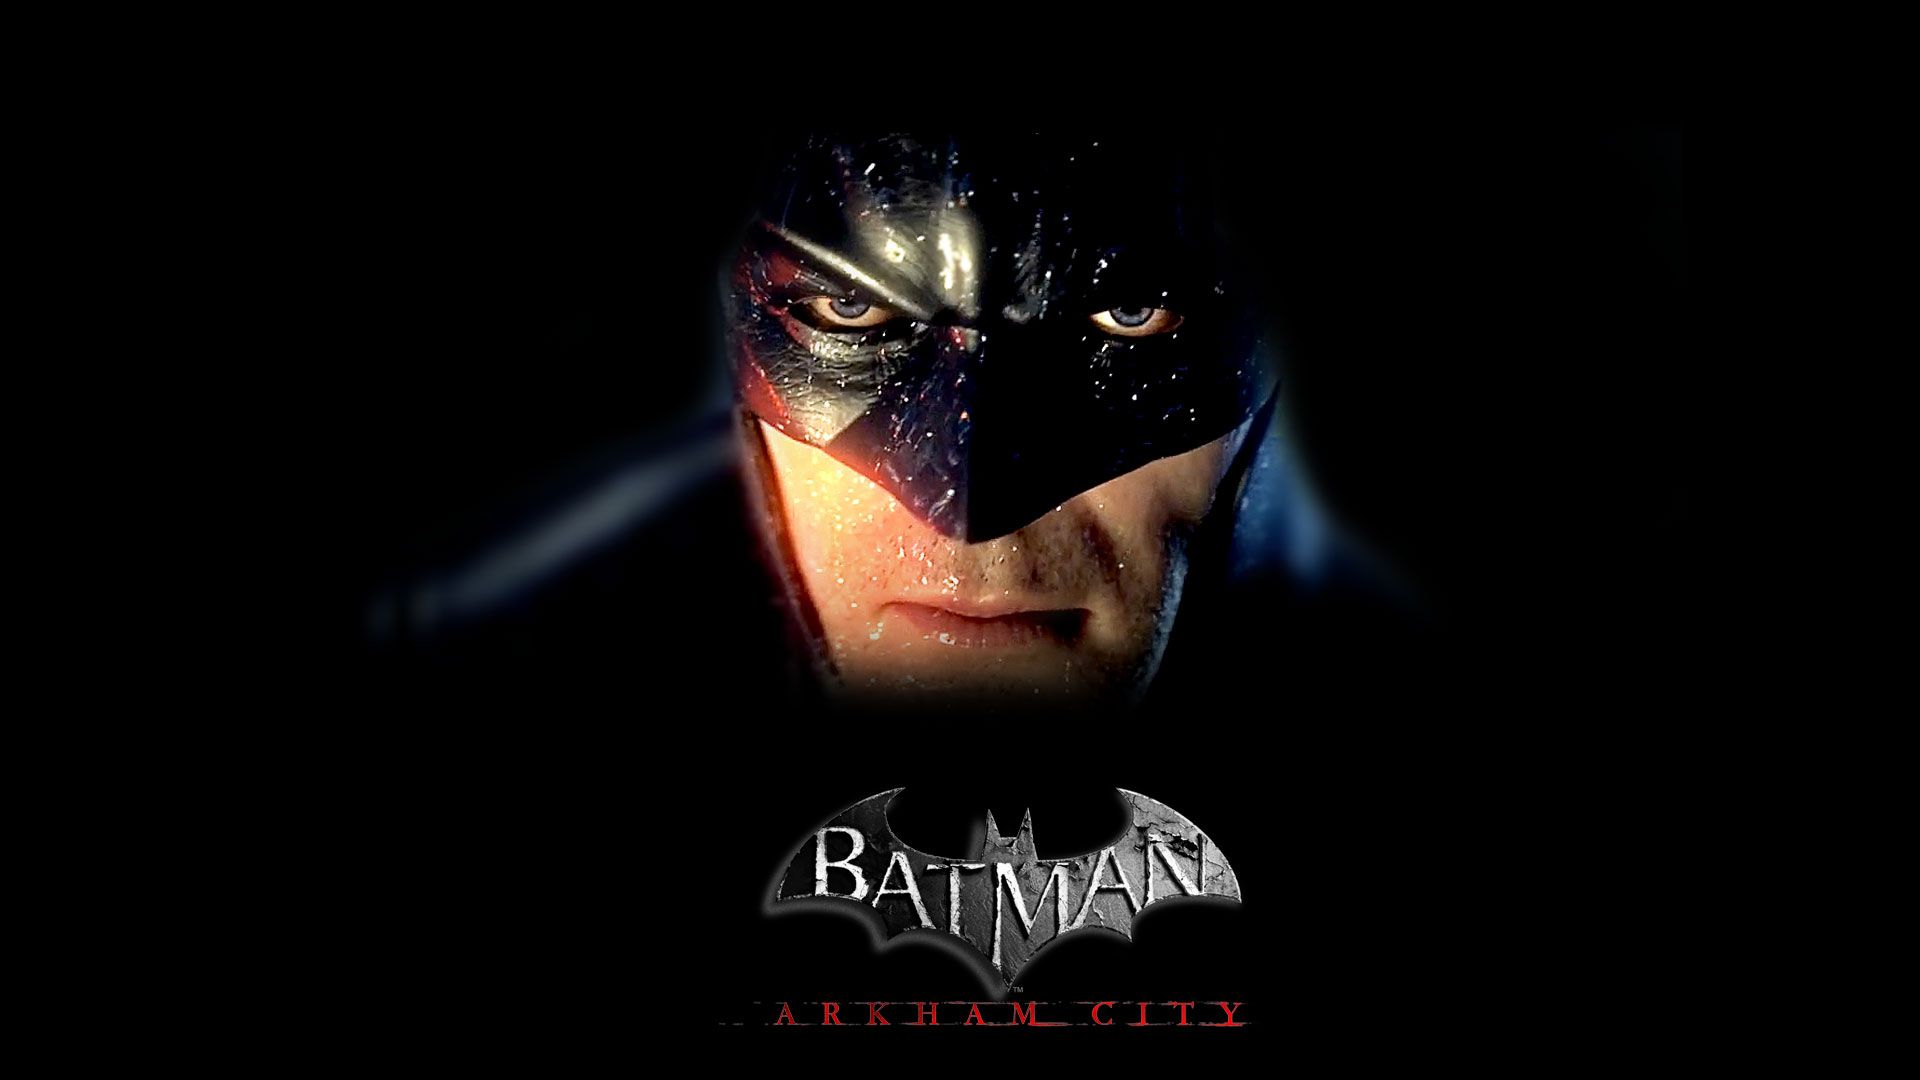 Free download Batman Arkham City Wallpaper in HD High Resolution